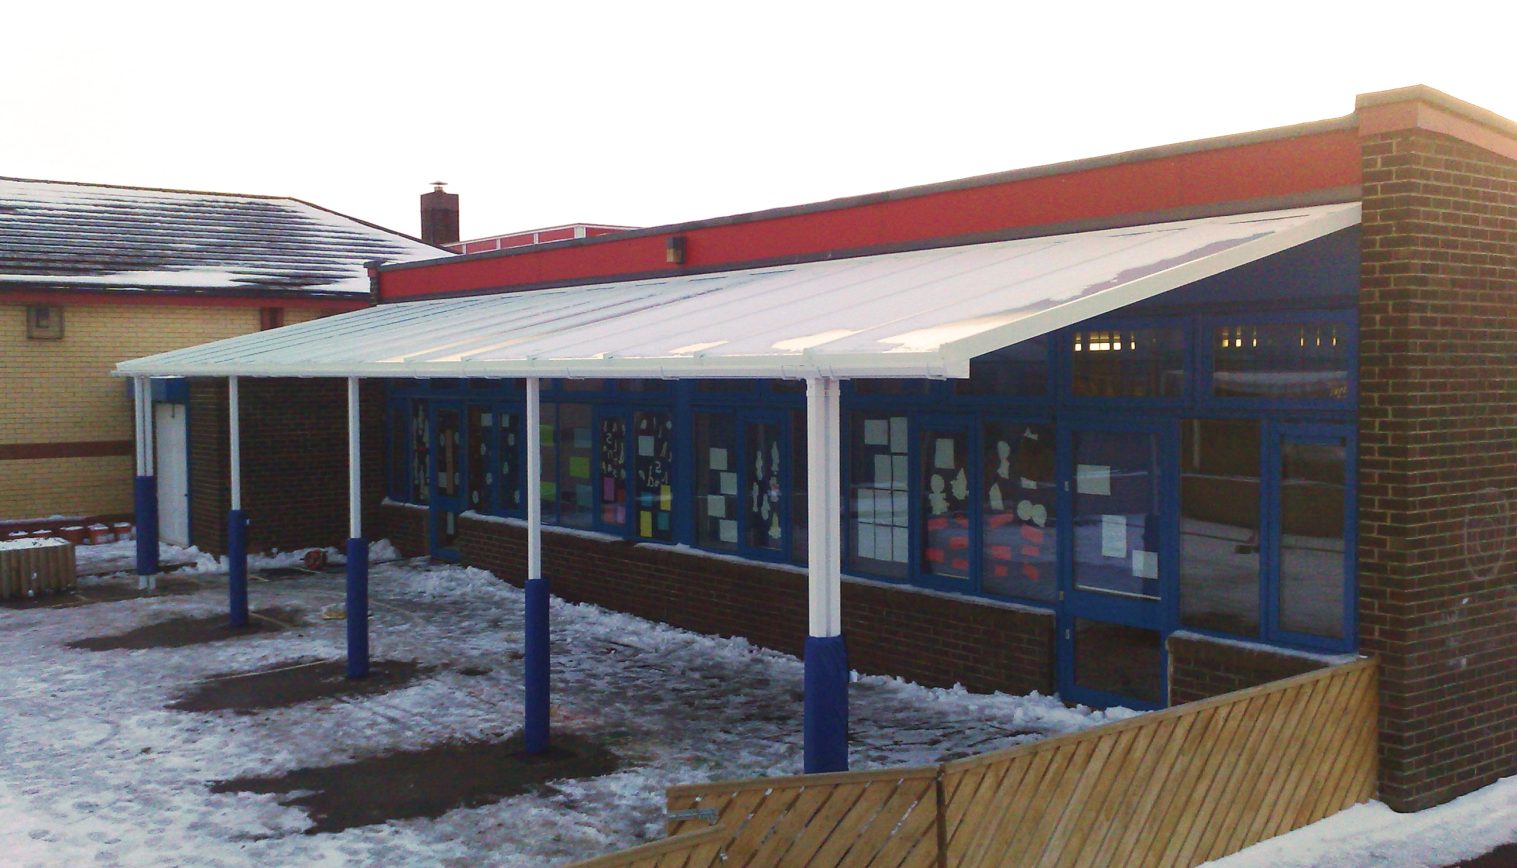 Pennyman Primary School